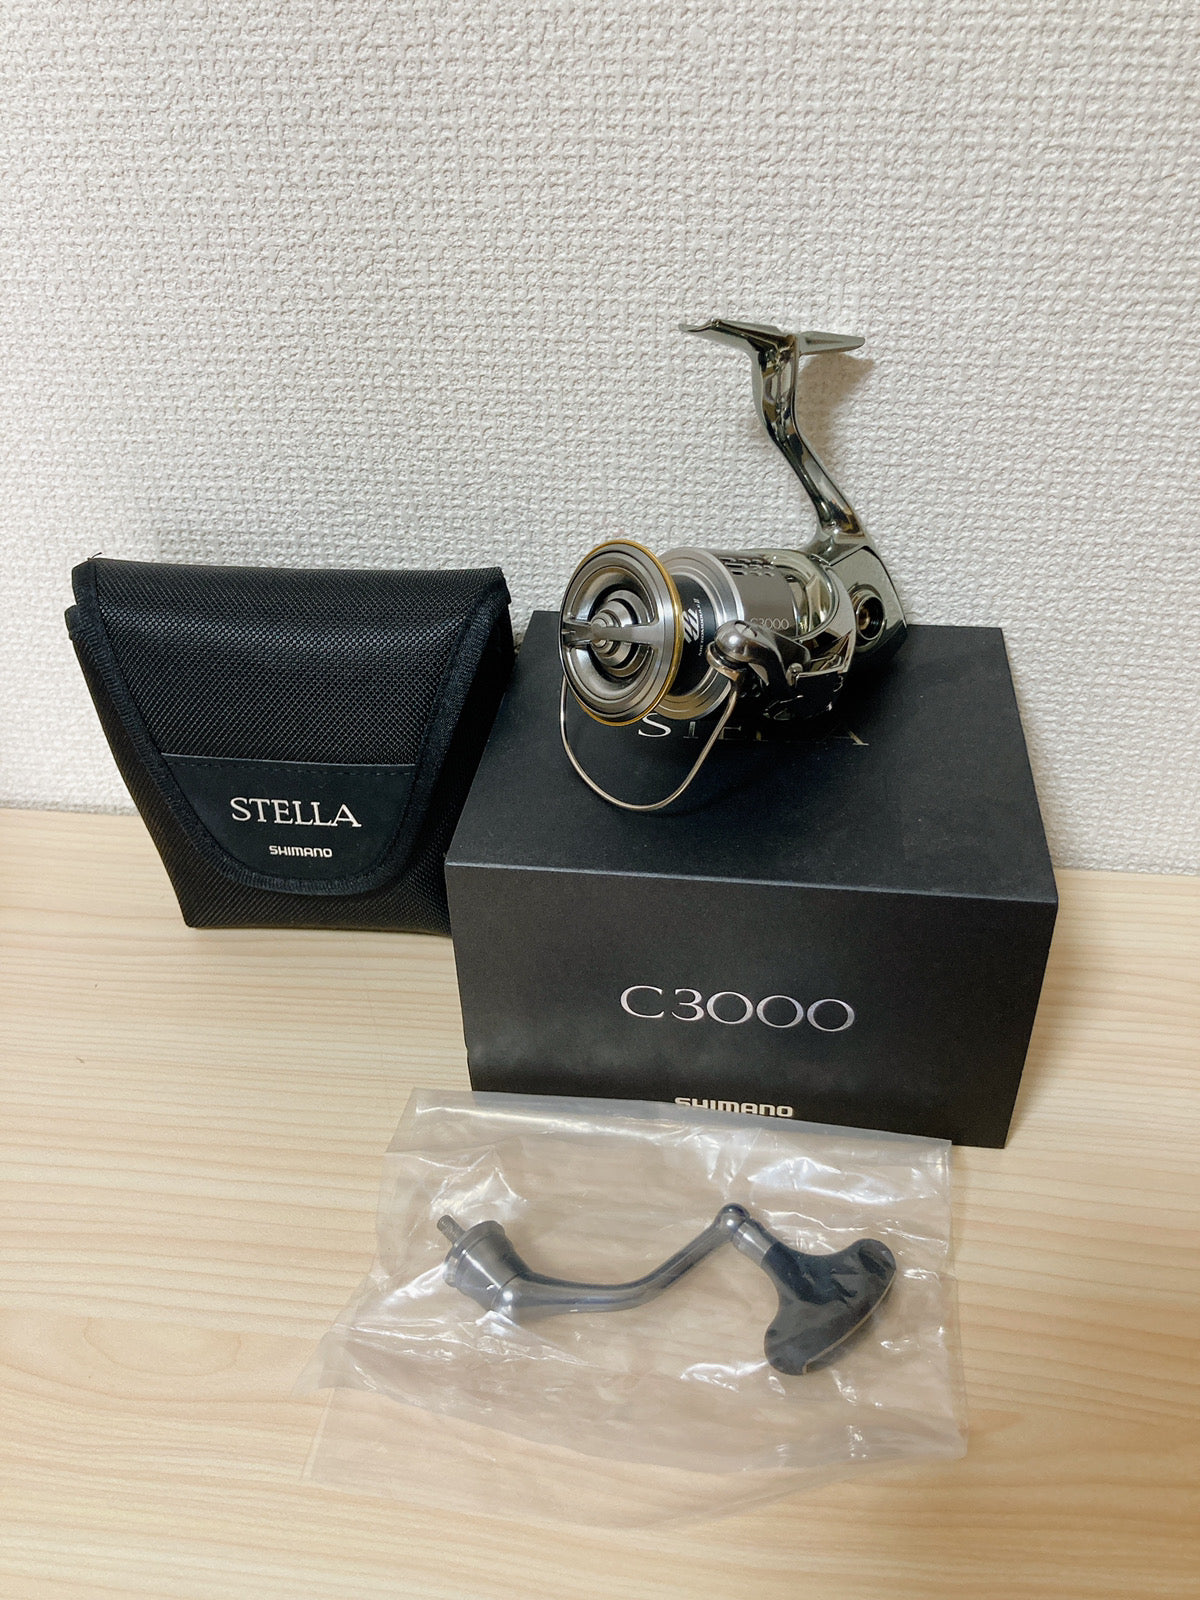 Shimano Spinning Reel 18 STELLA C3000 Gear Ratio 5.3:1 Fishing Reel IN